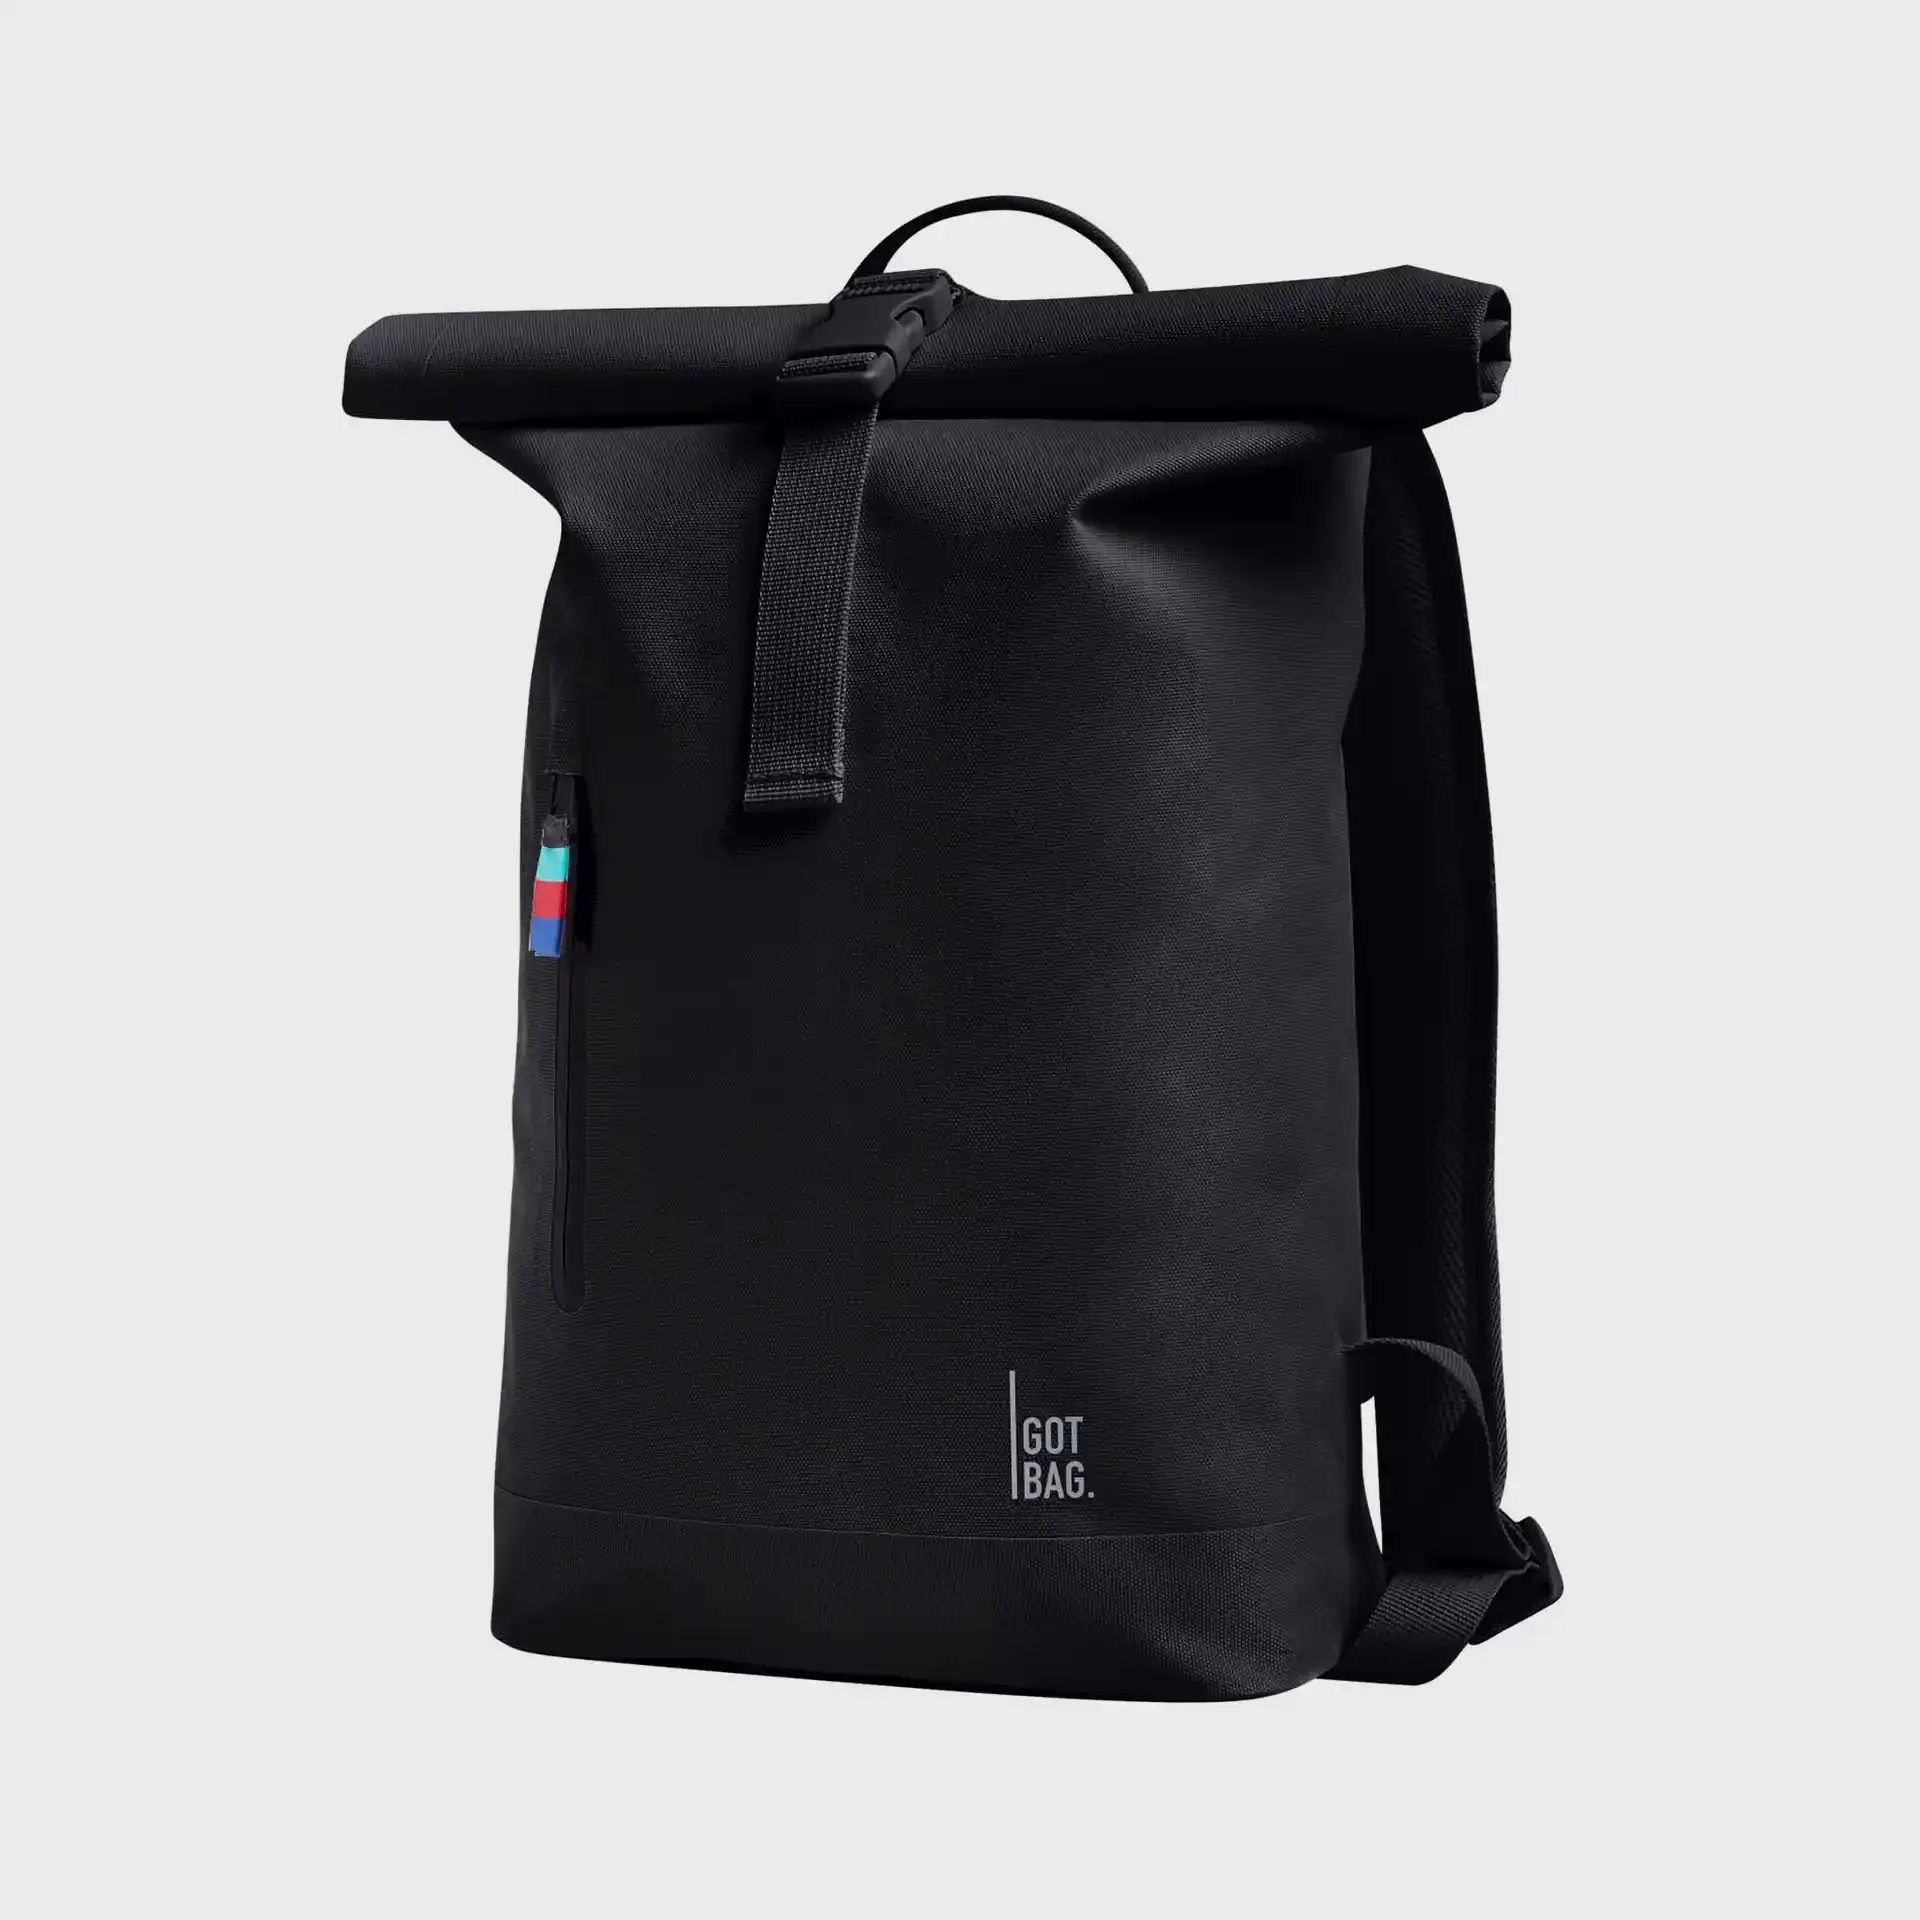 Got Bag Rolltop Small Backpack Black